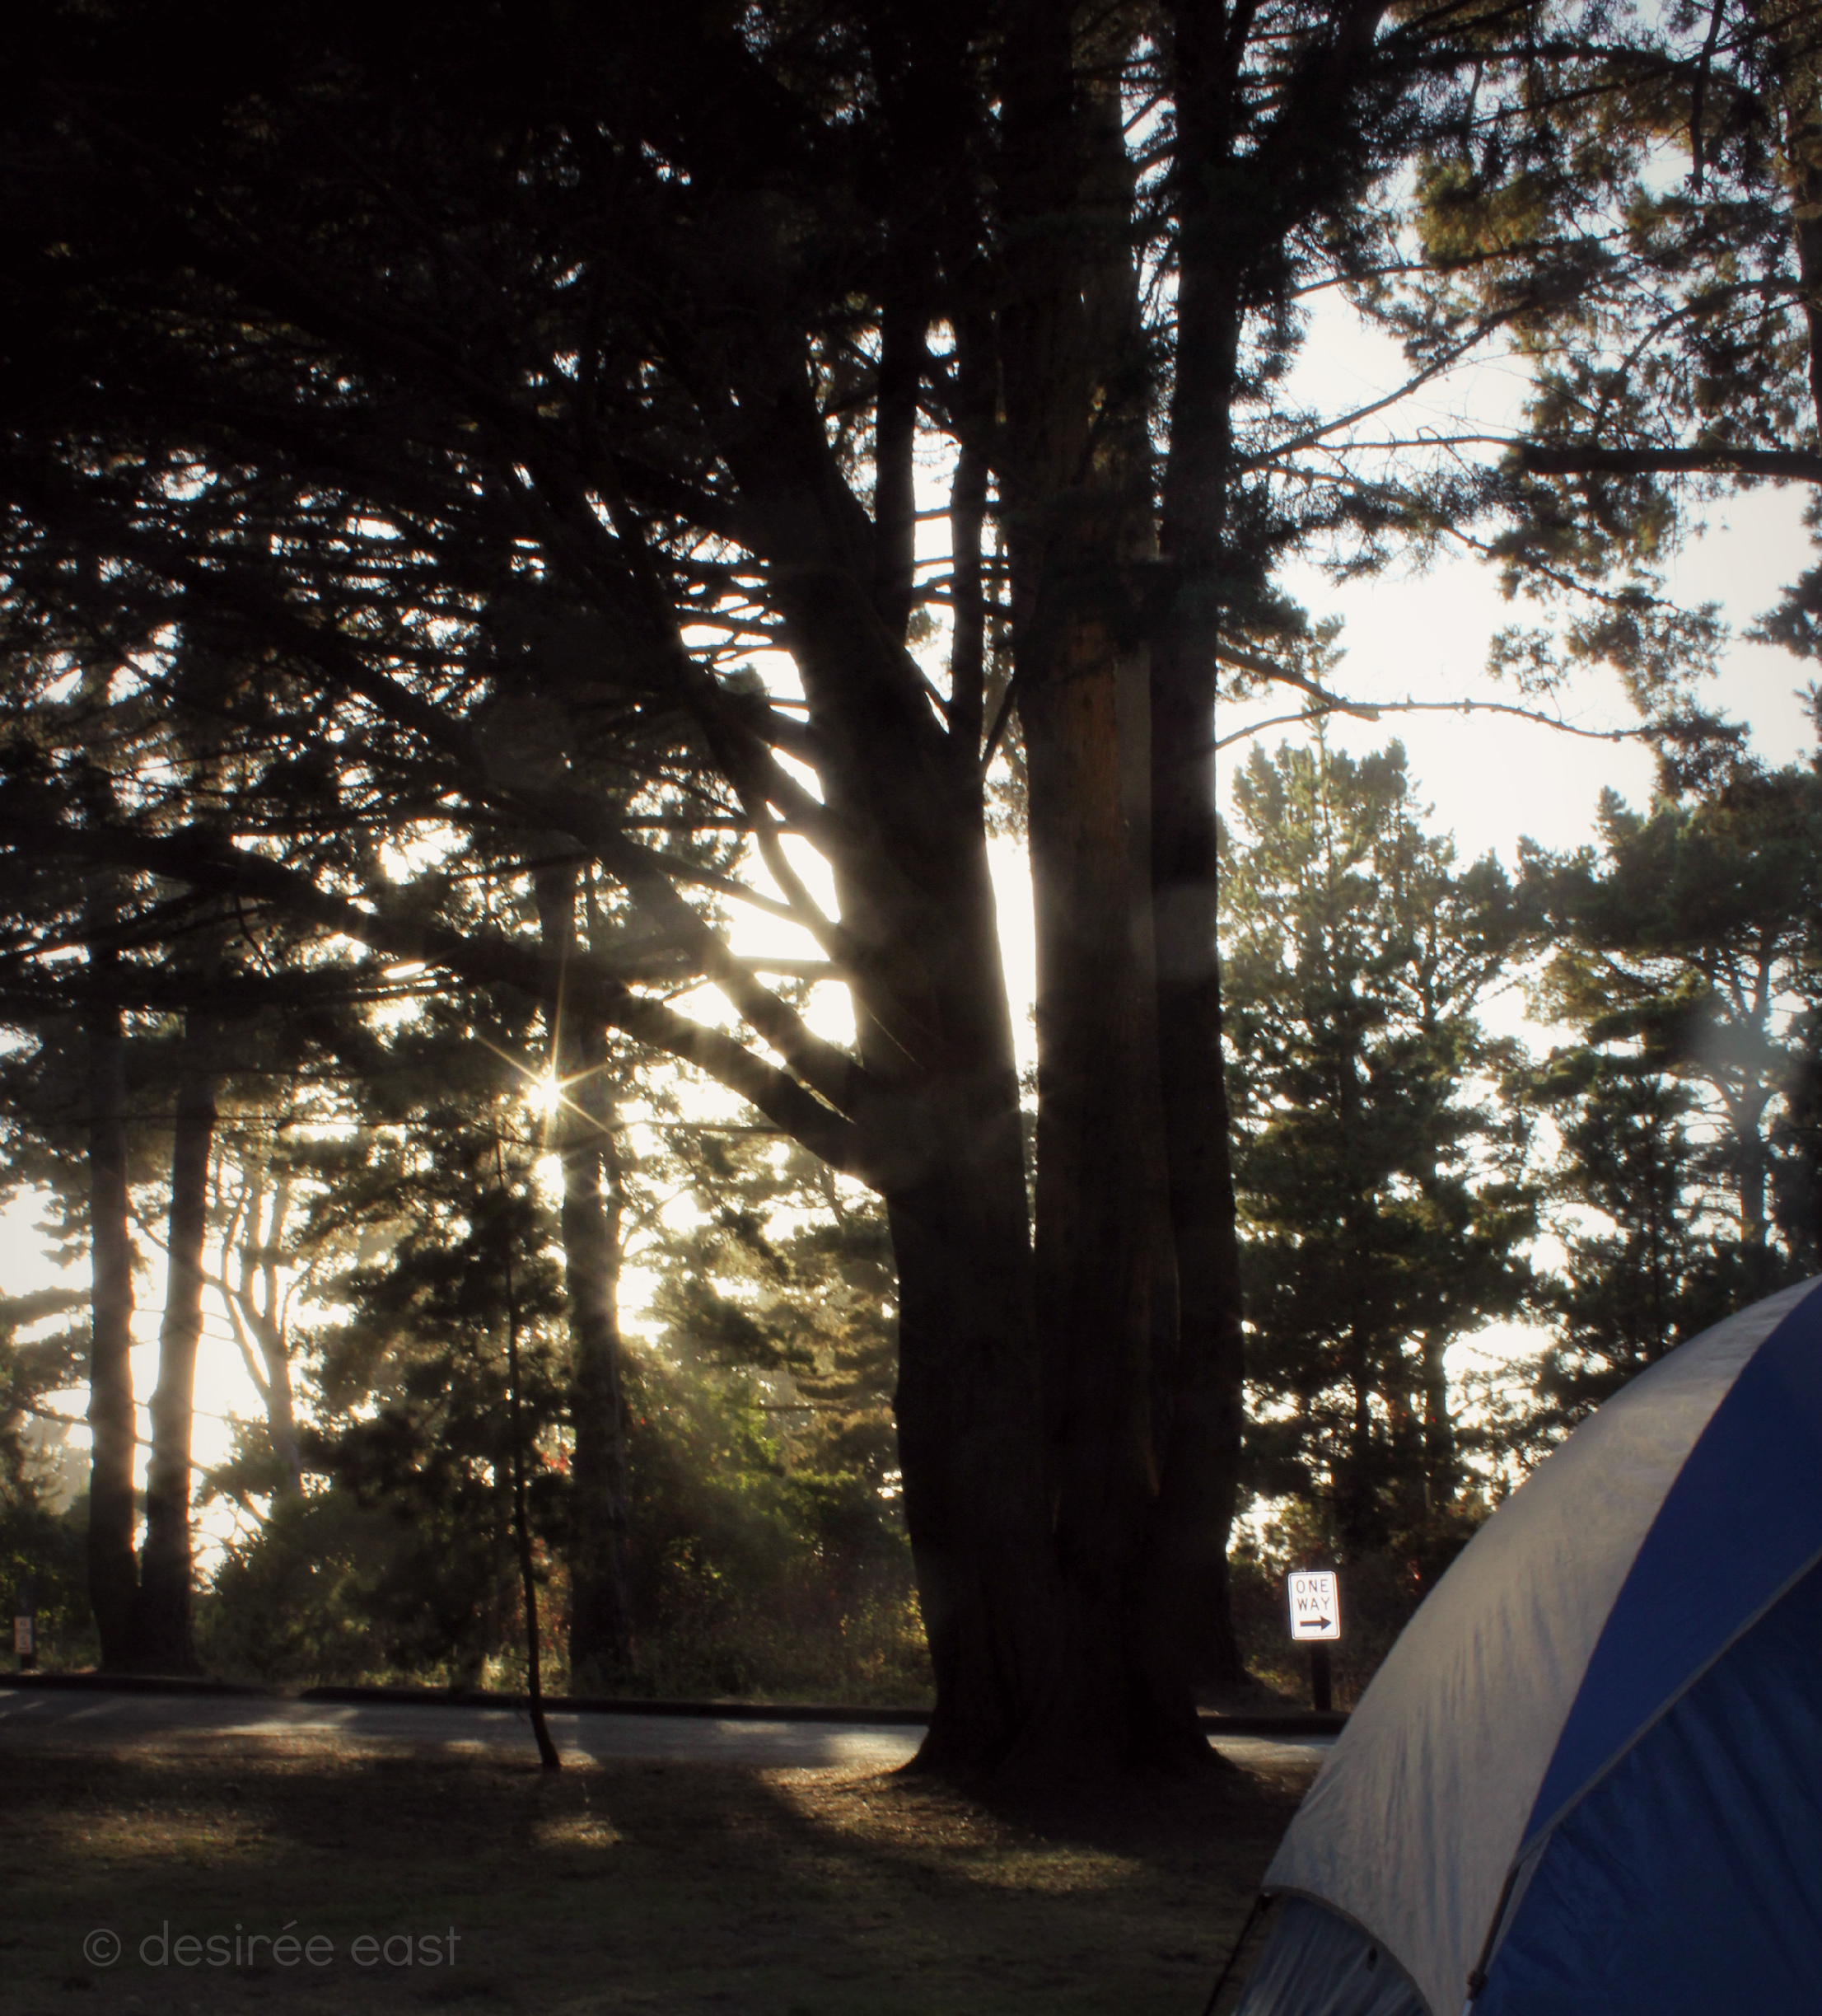 sunshine peeking through the trees. big sur, california. photo by desiree east.